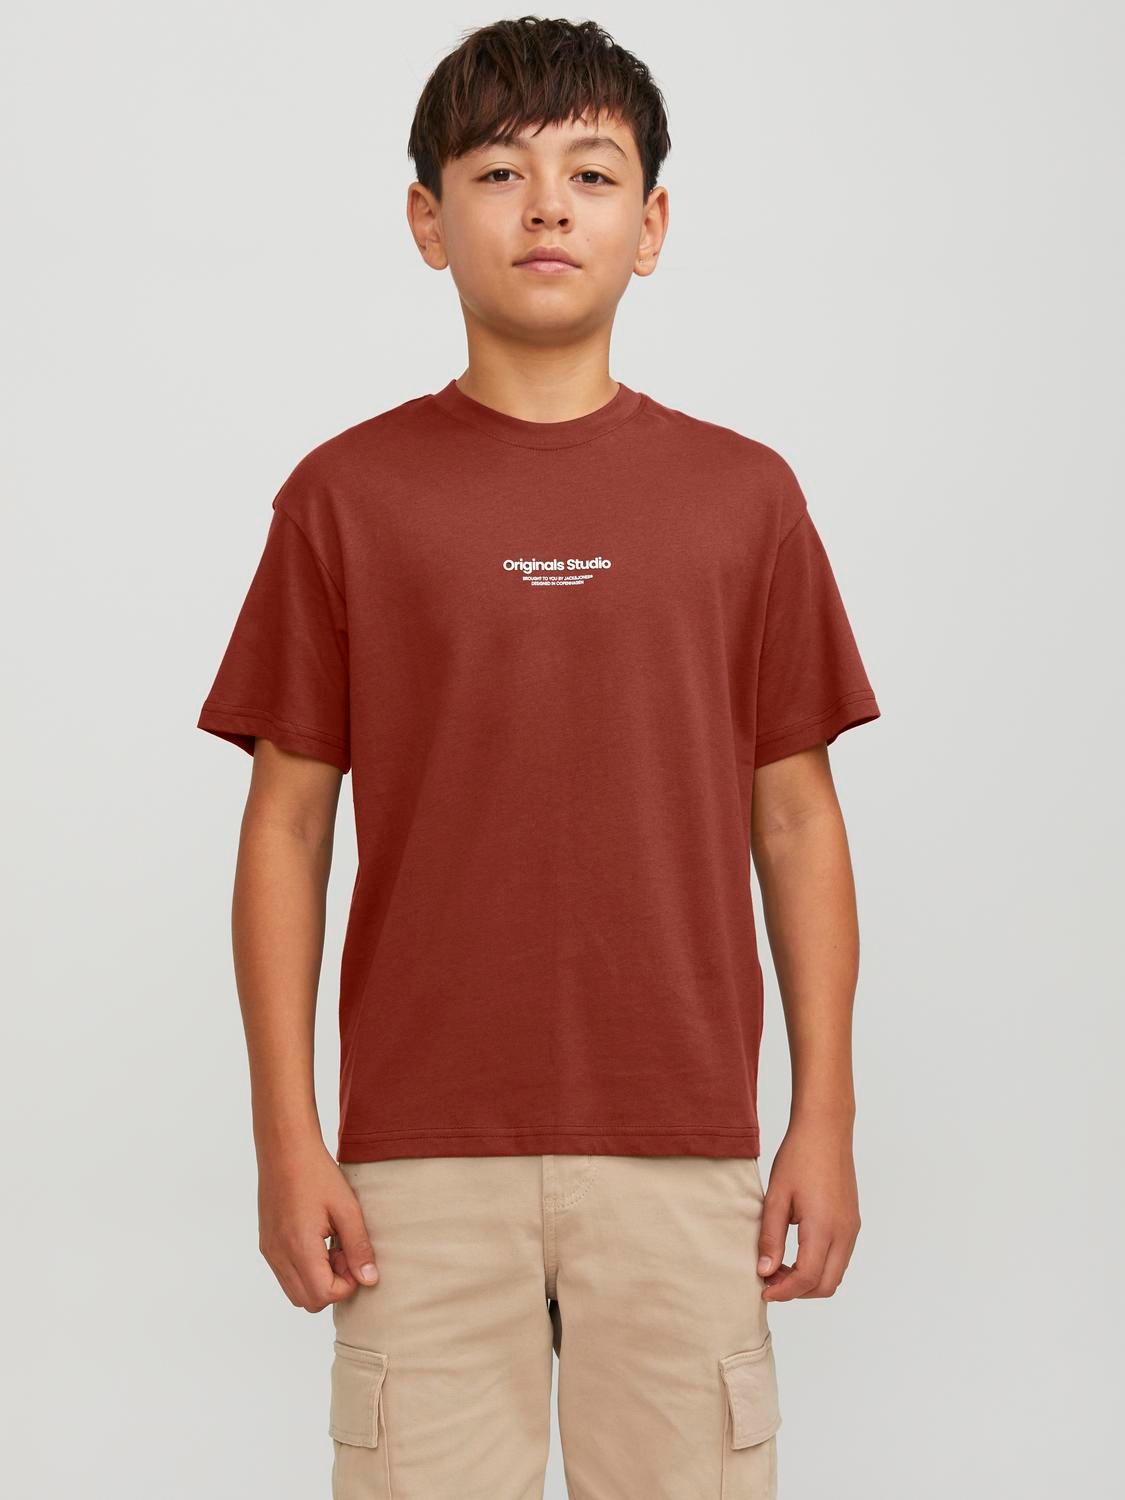 Jack & Jones Printed T-shirt For boys -Brandy Brown - 12242827